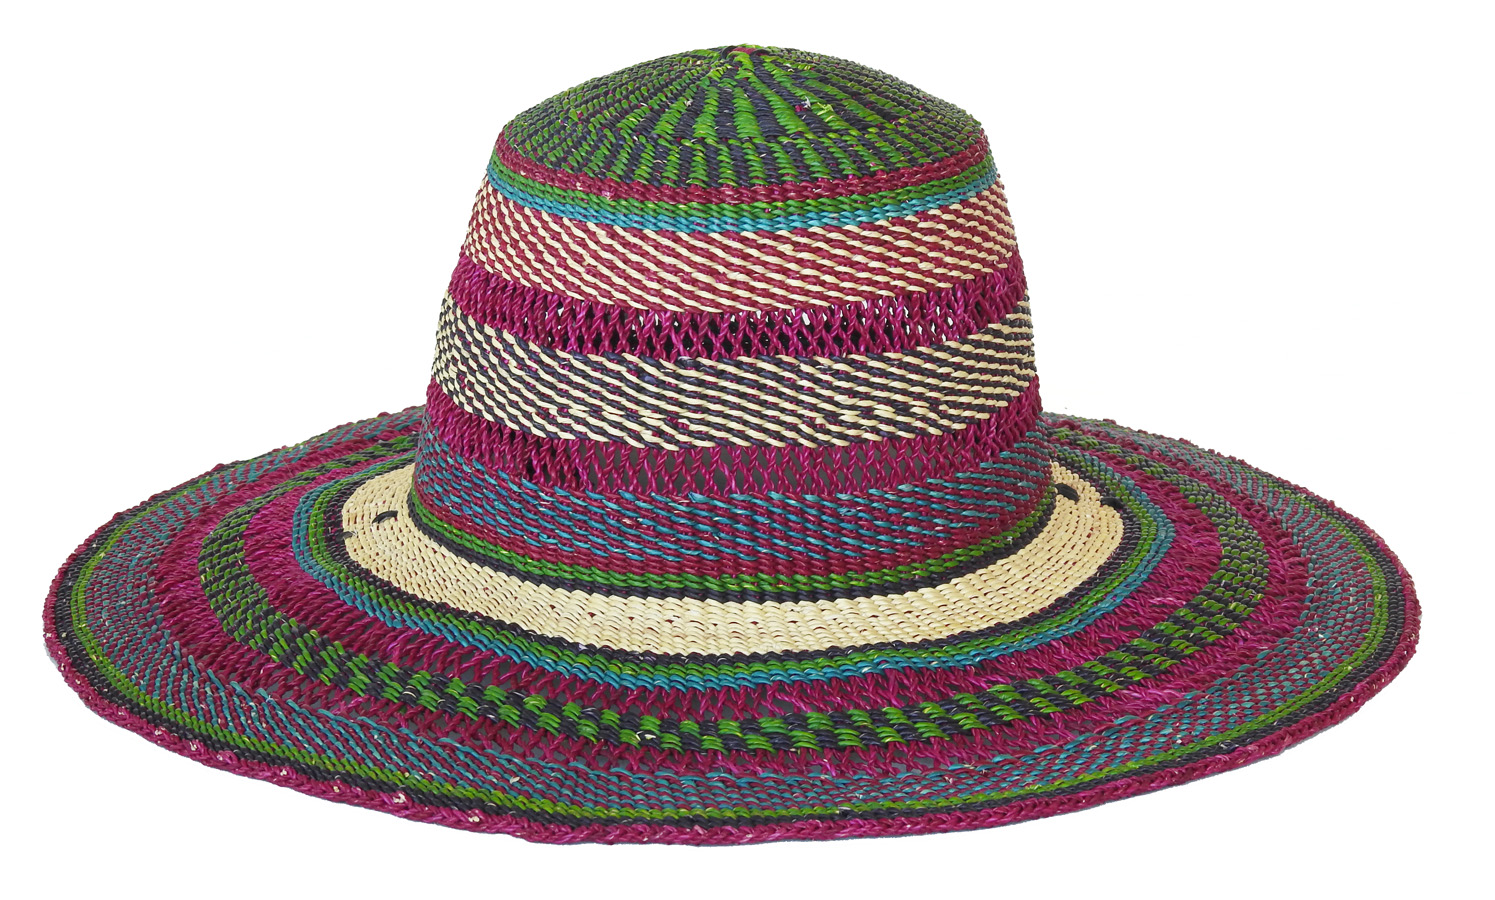 Bolga Elephant Grass Hat - handmade in Ghana as a hard wearing sun hat